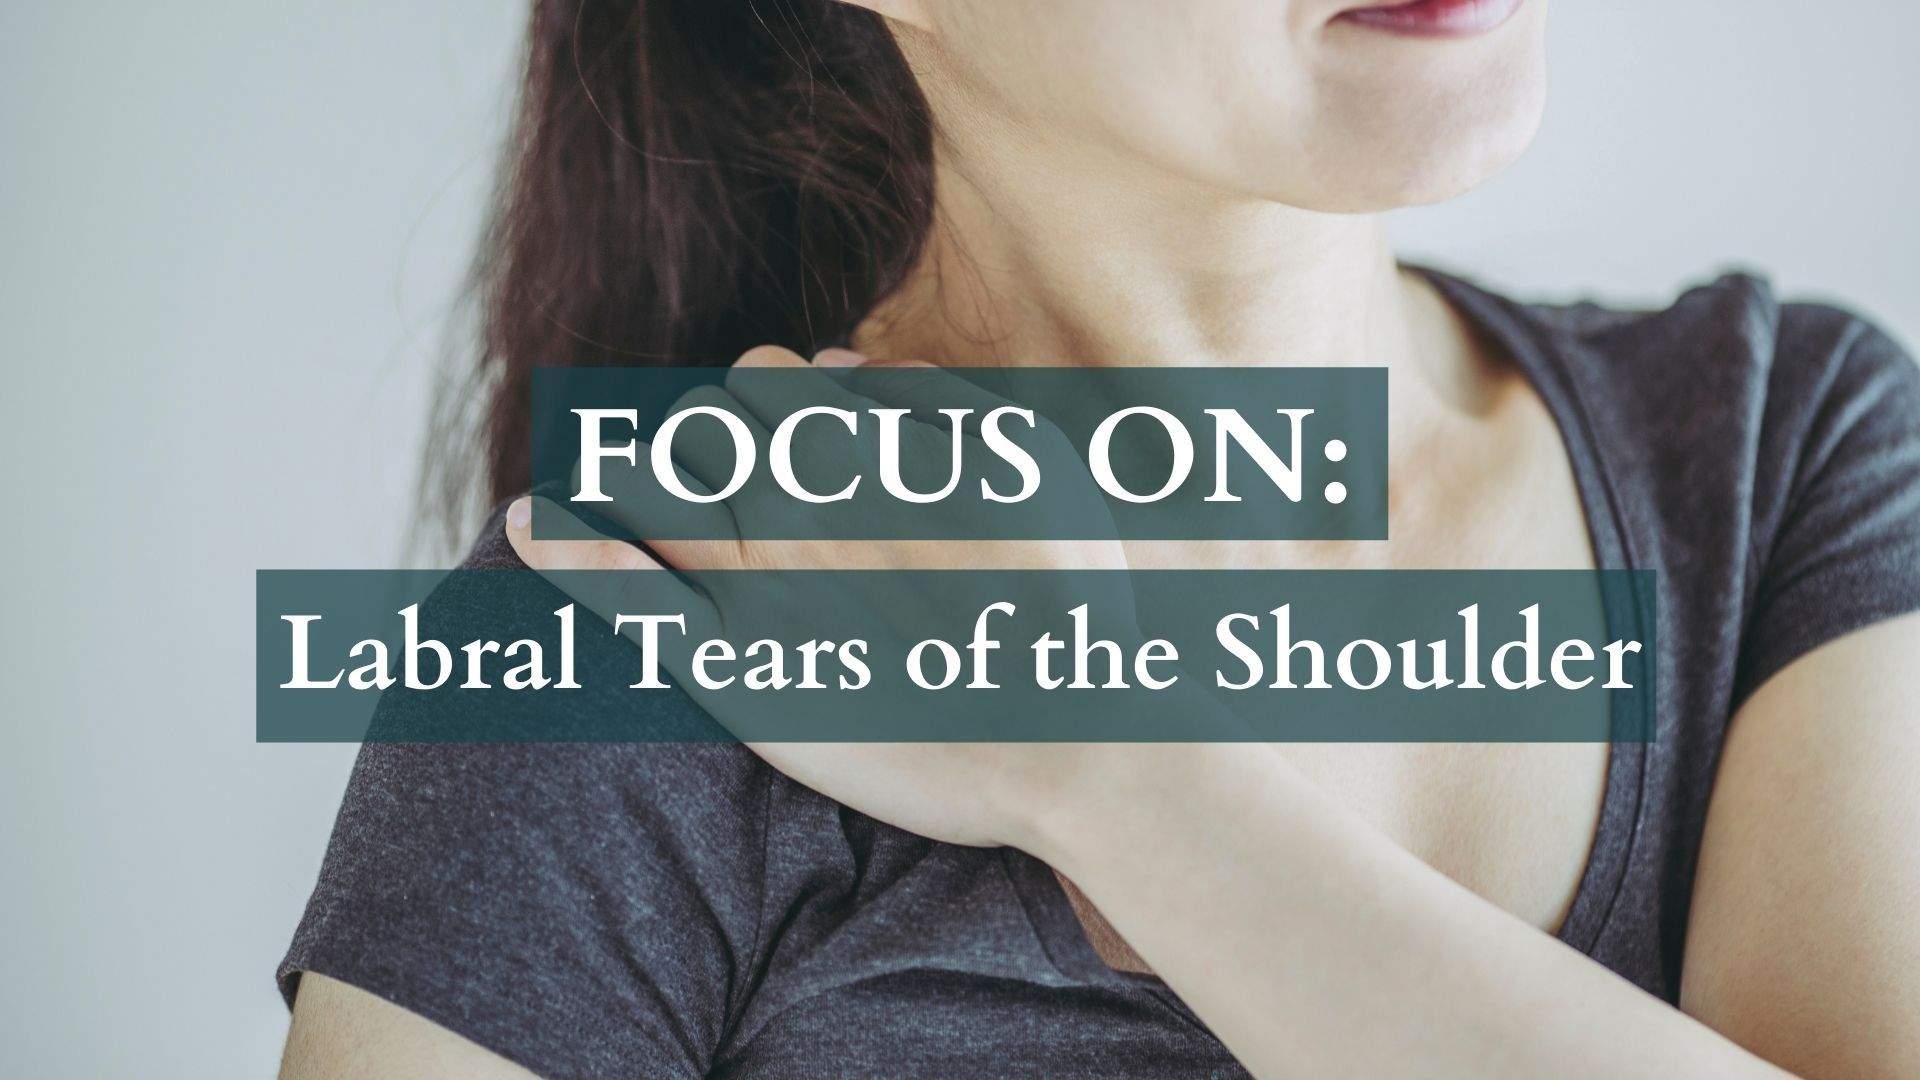 Focus On: Labral Tears of the Shoulder